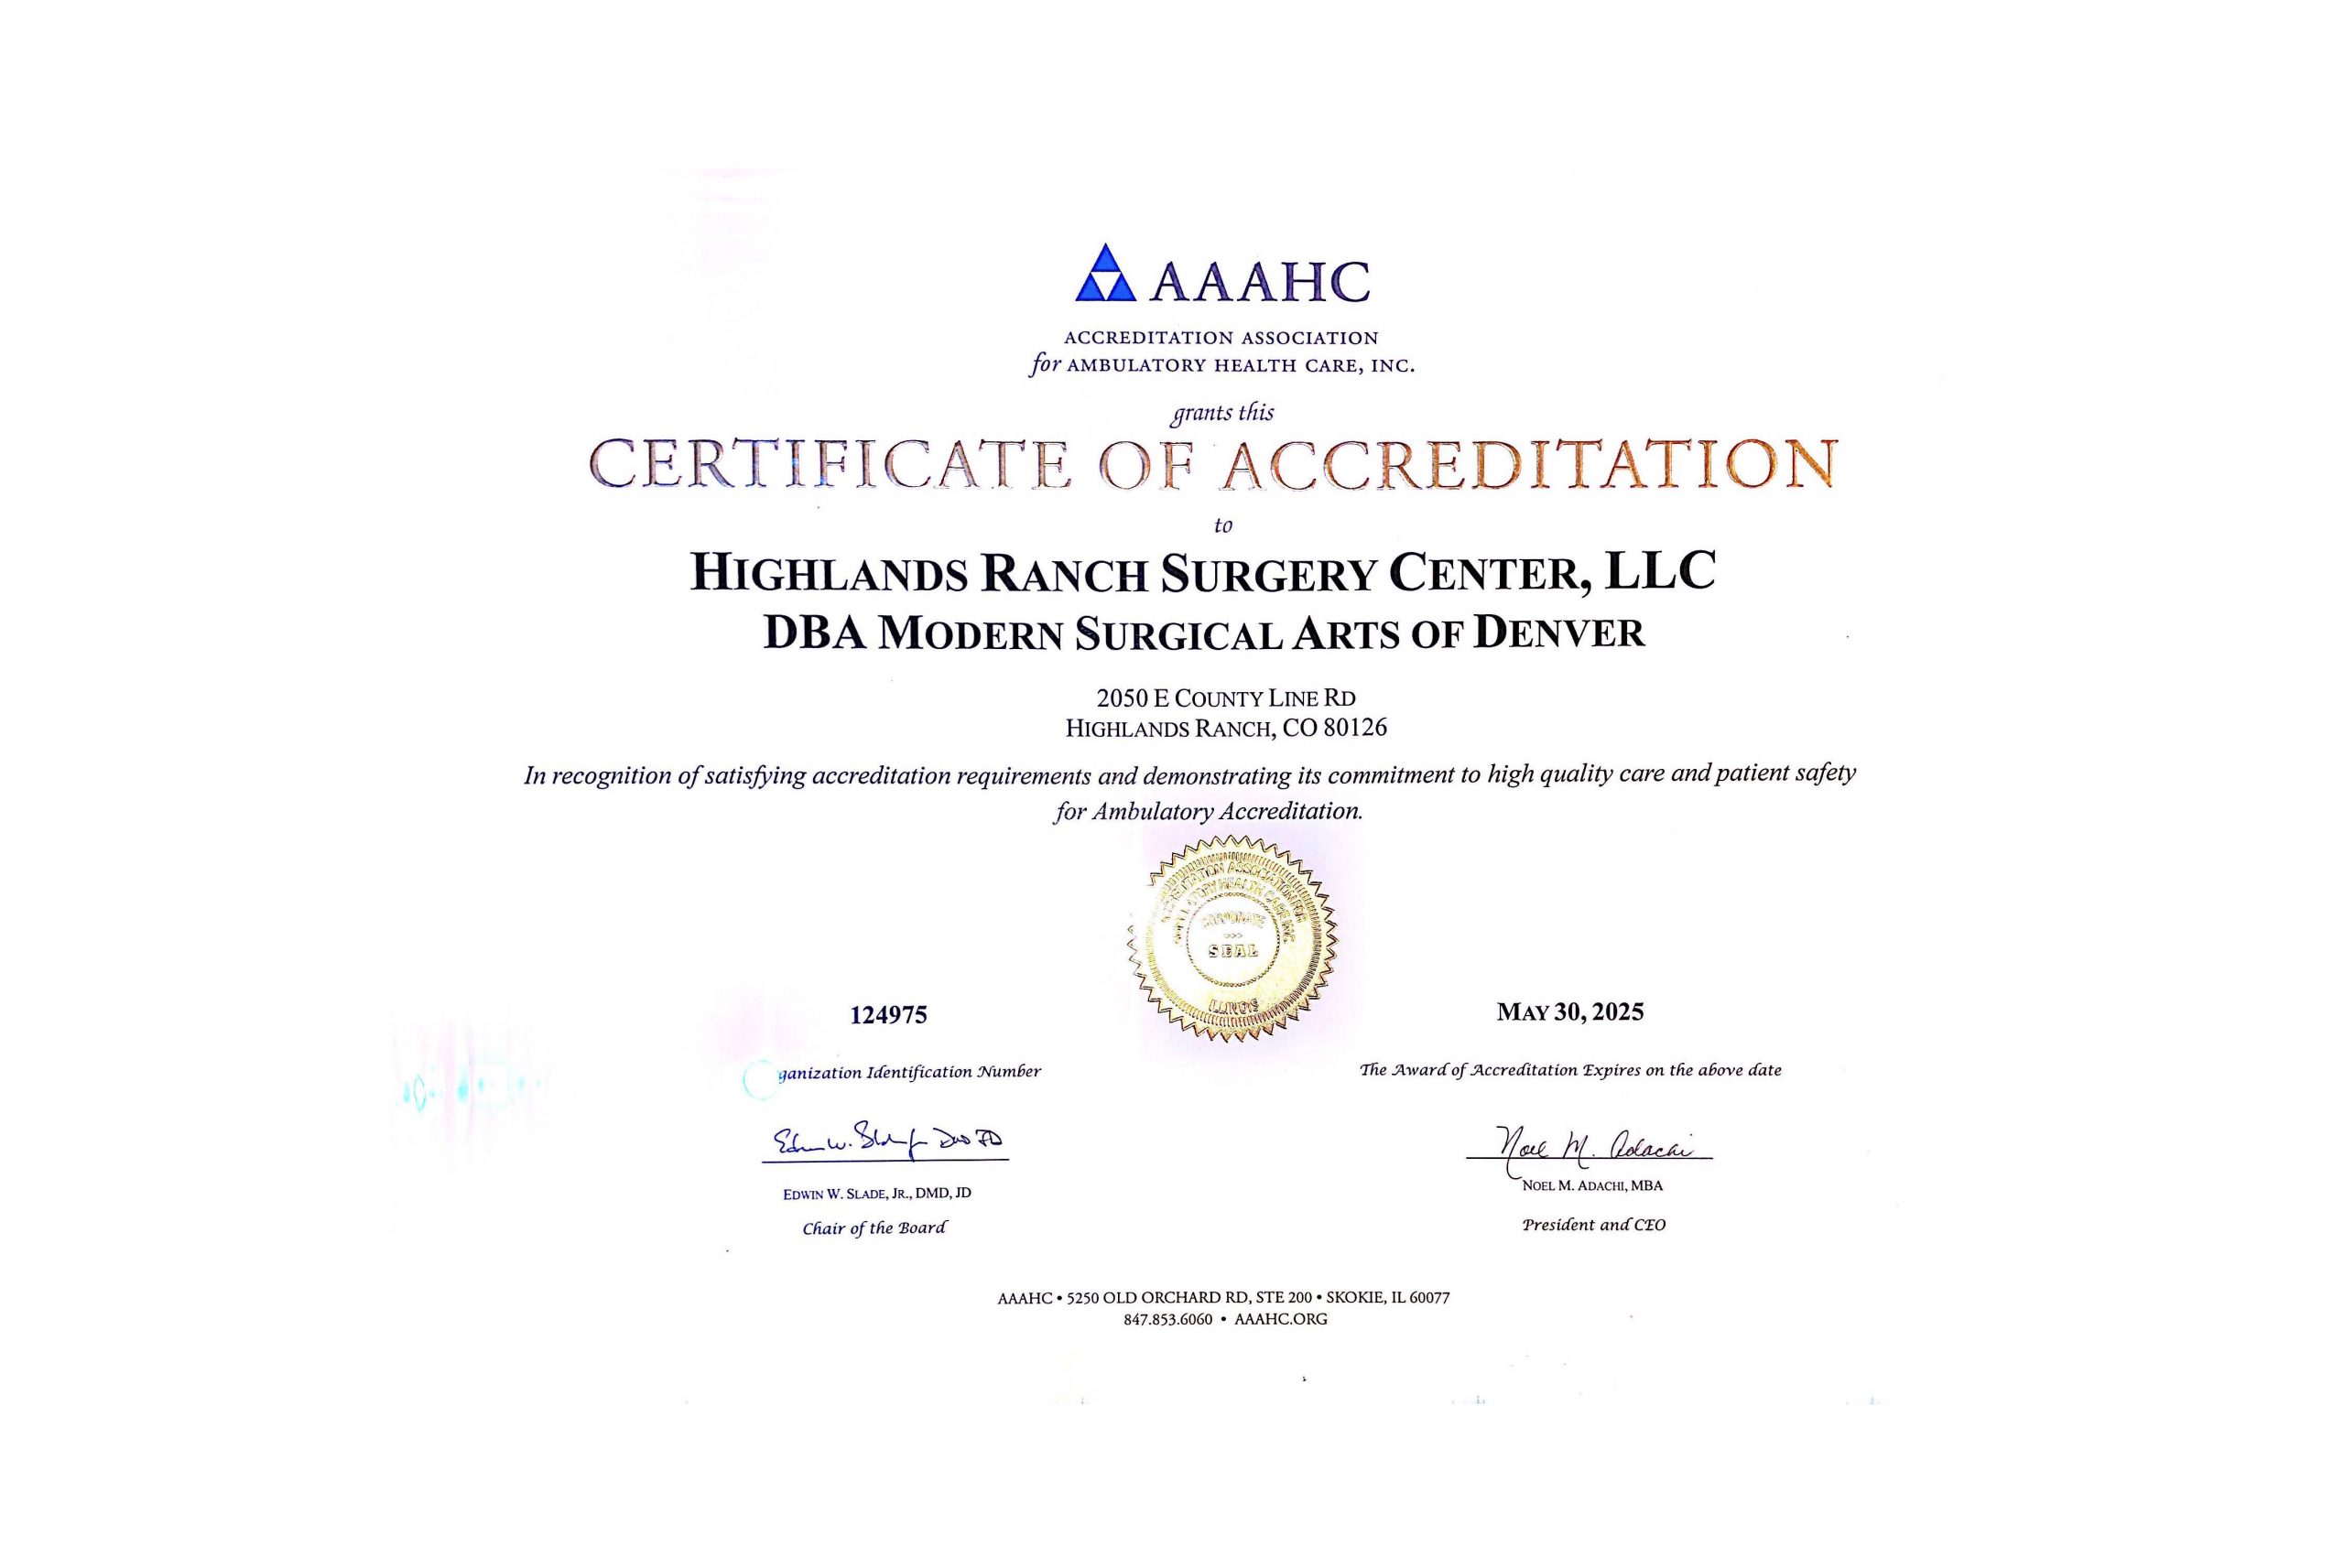 Accreditation Certificate for Ambulatory Health Care